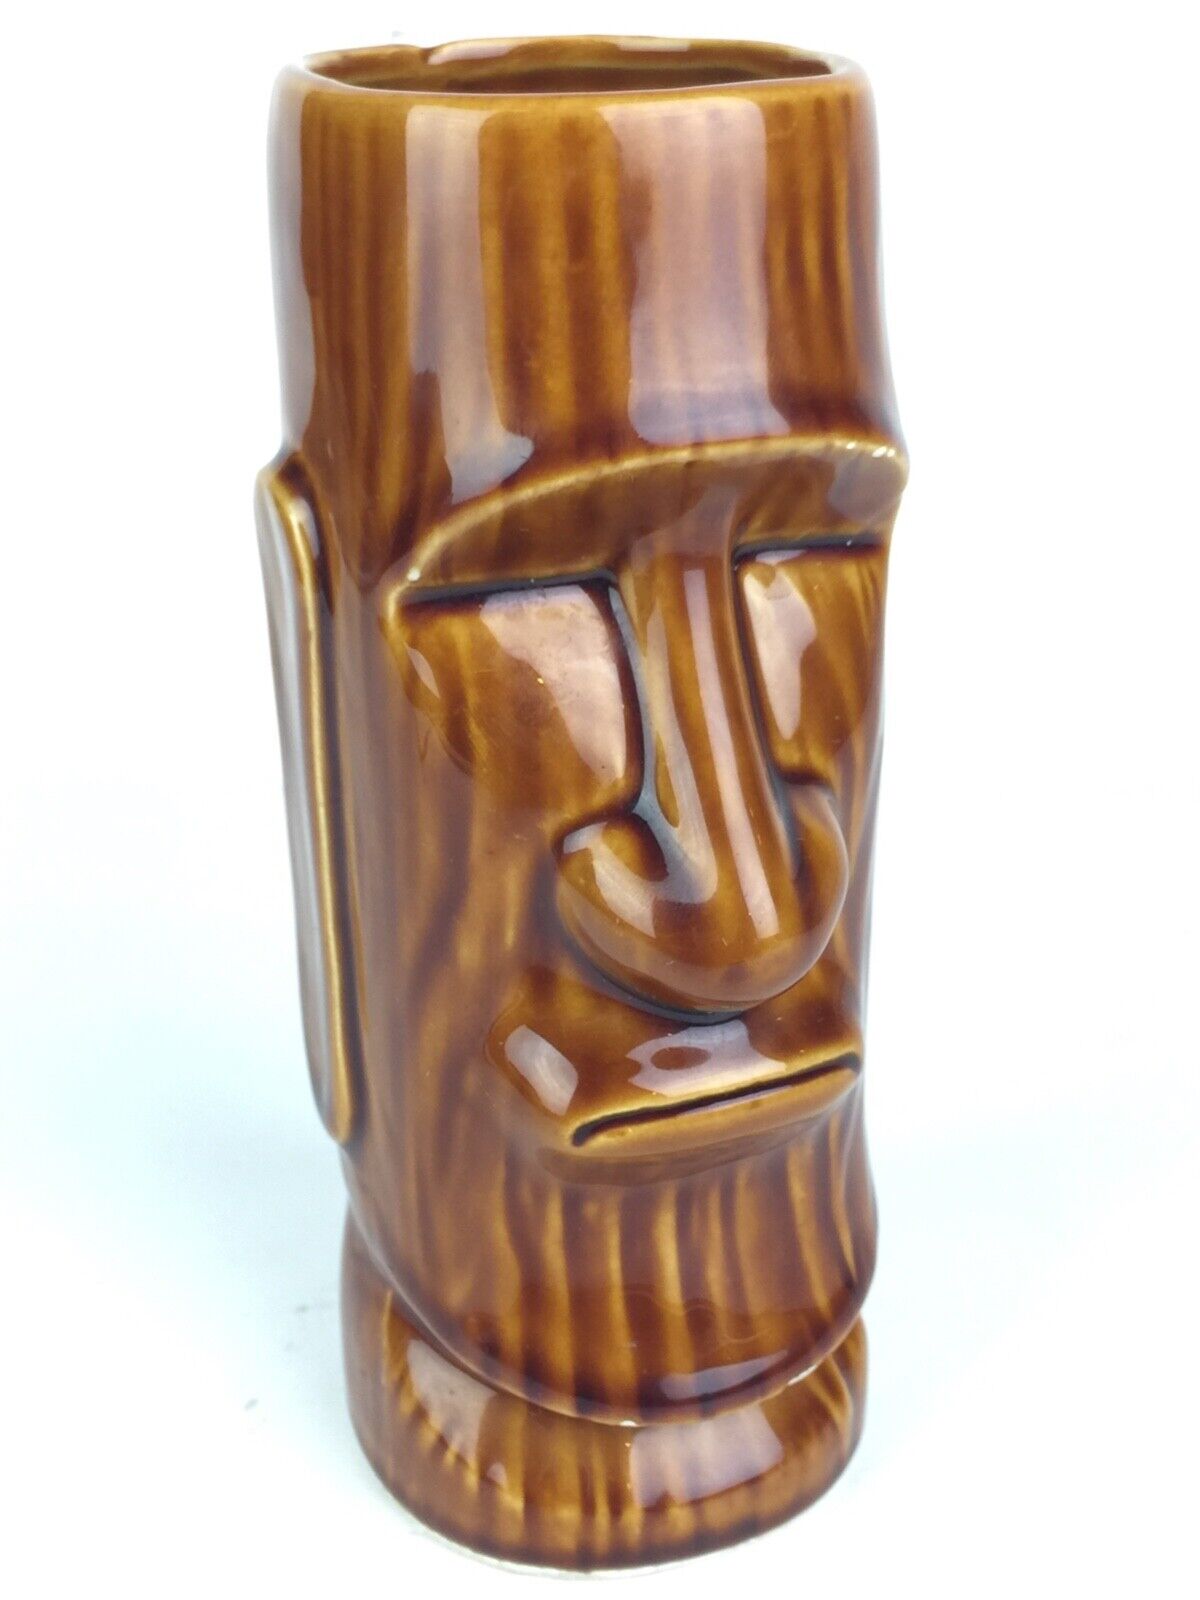 Vintage Hawaii Easter Island Themed Tiki Mug / Cup Caramel/brown - Excellent